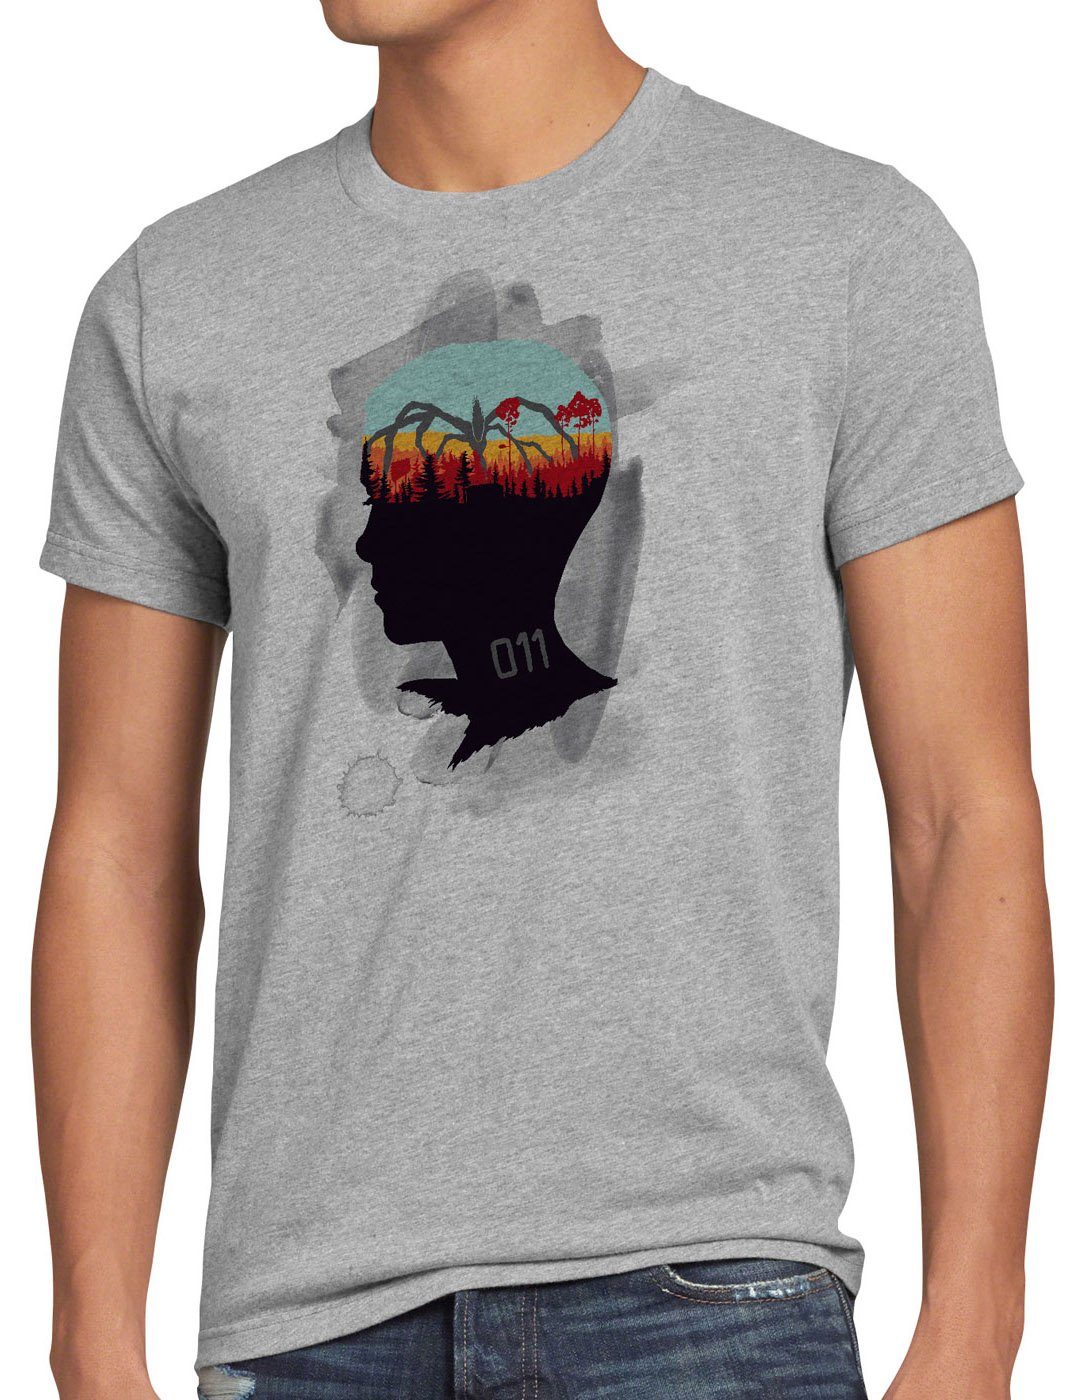 style3 Print-Shirt Herren T-Shirt Eleven eleven stranger elfi things monster halloween hawkins 011 grau meliert | T-Shirts